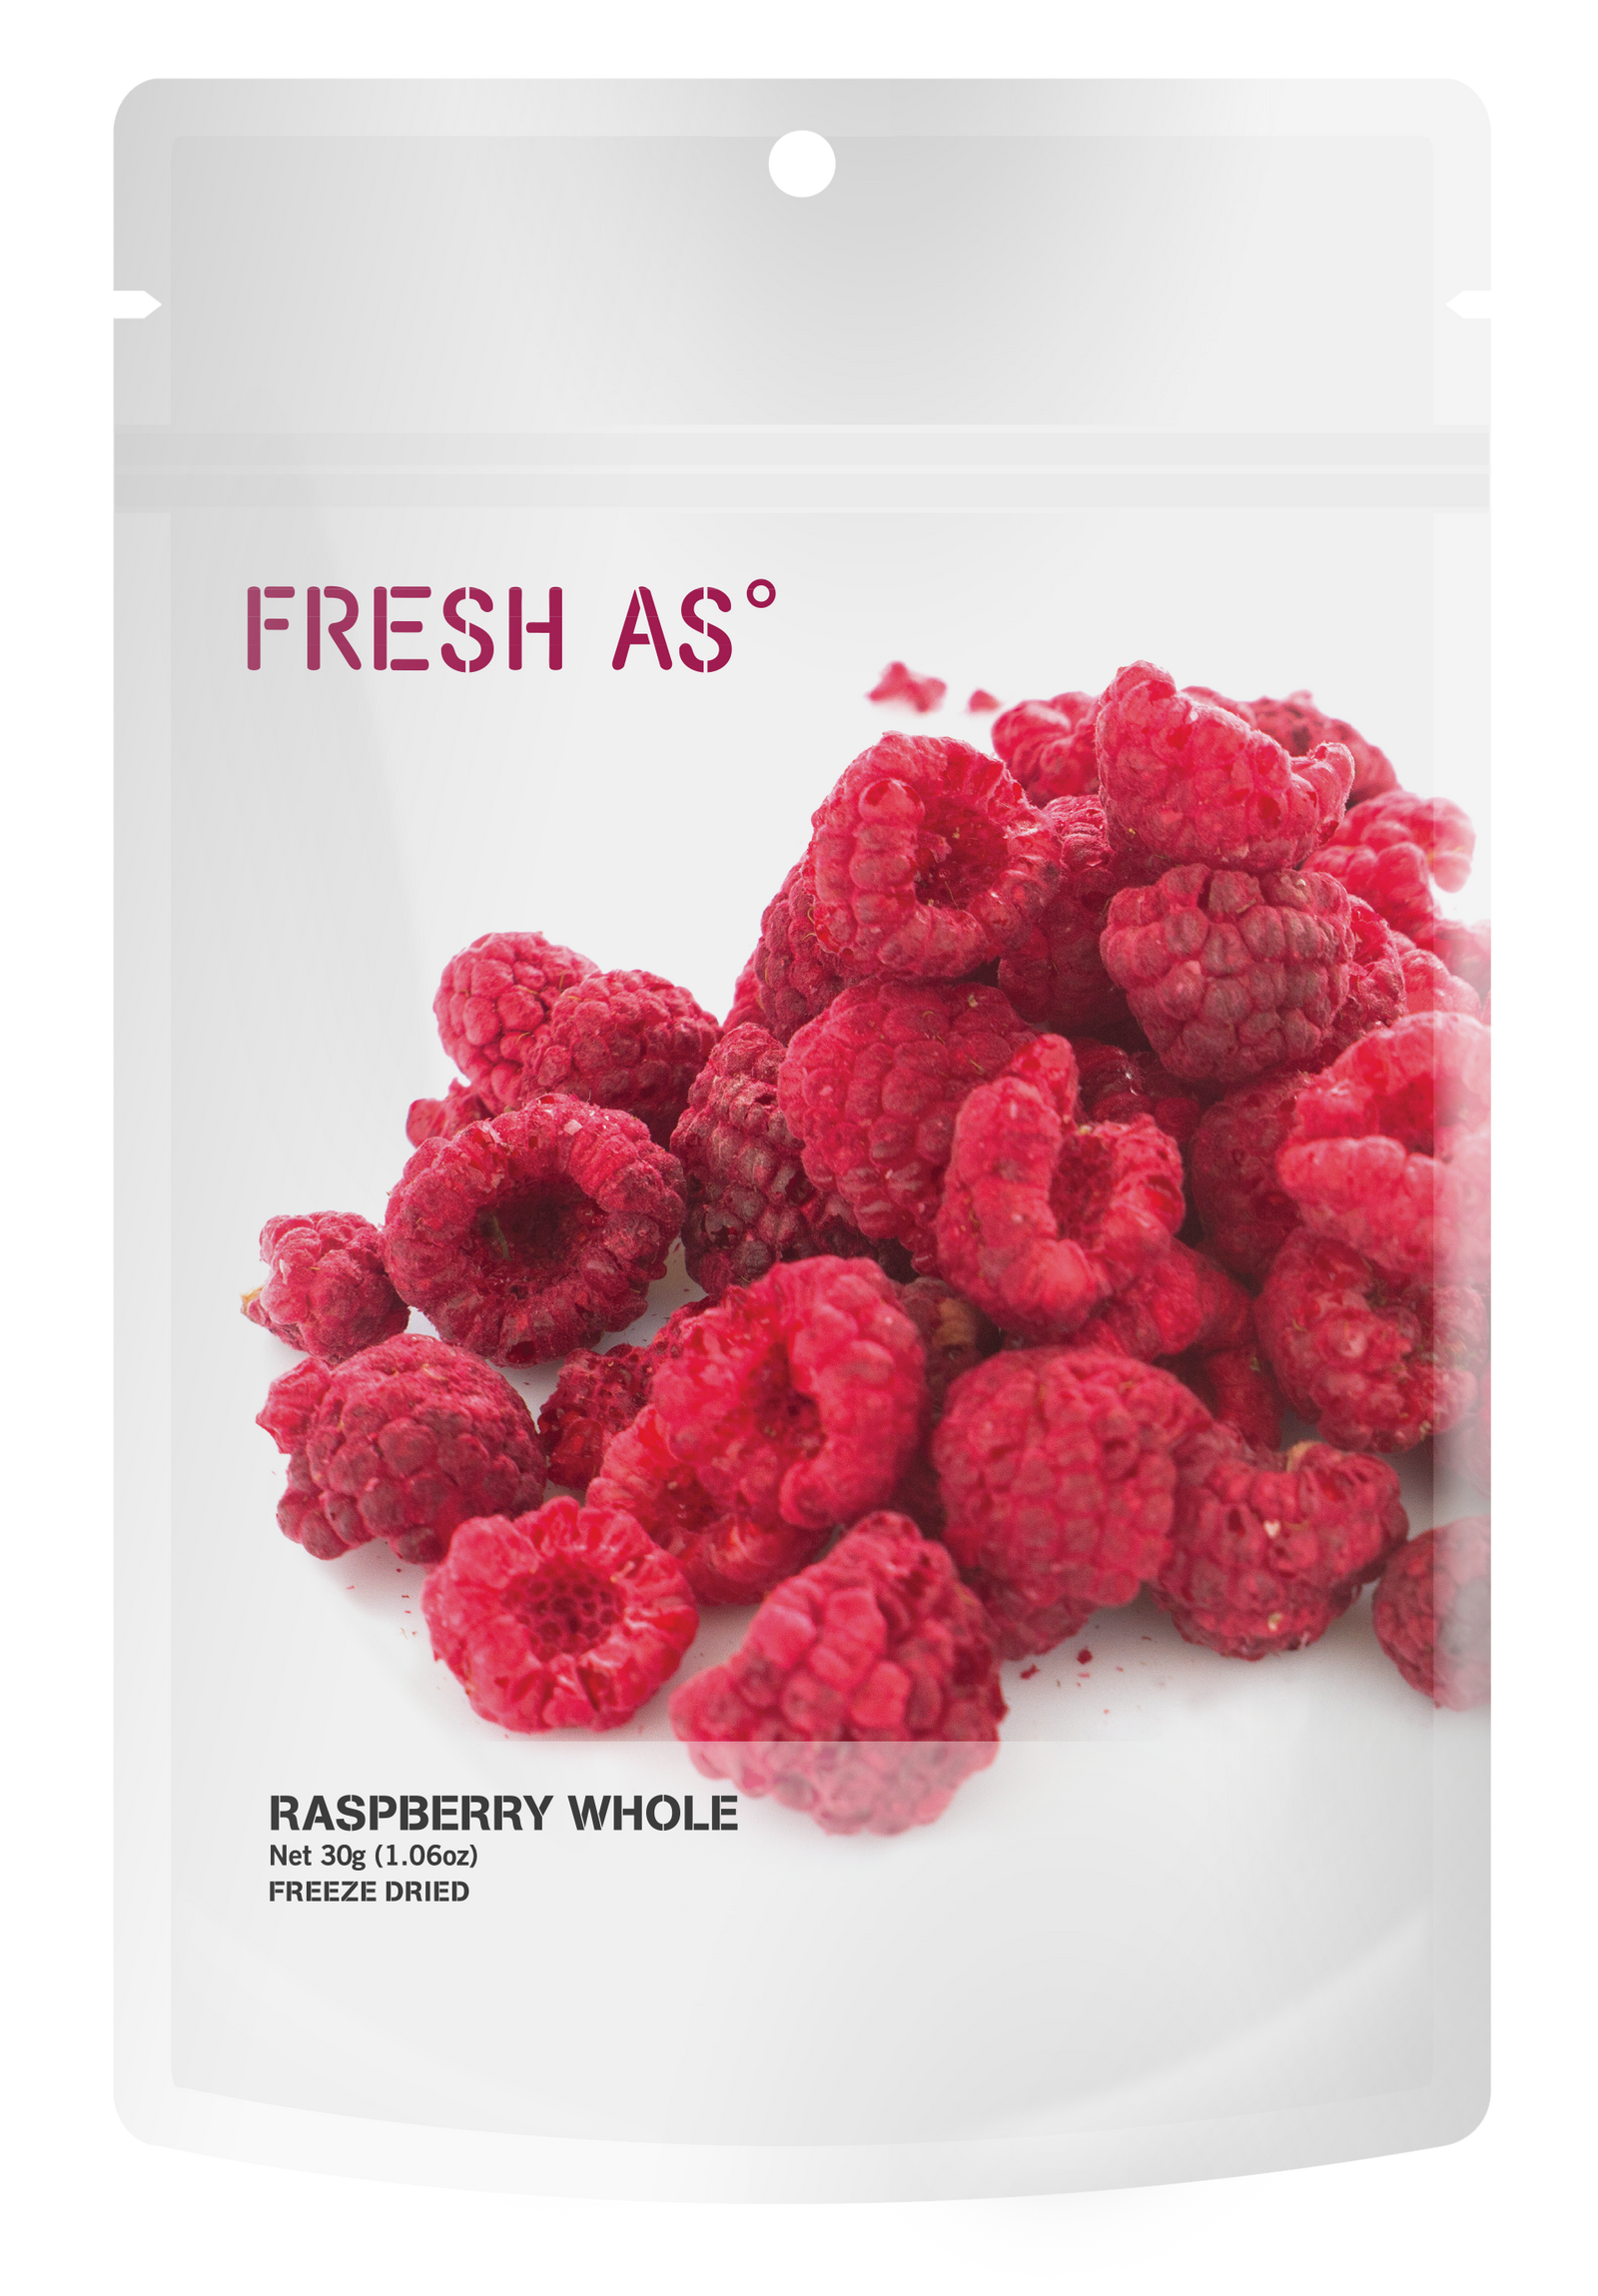 Raspberry whole 30g